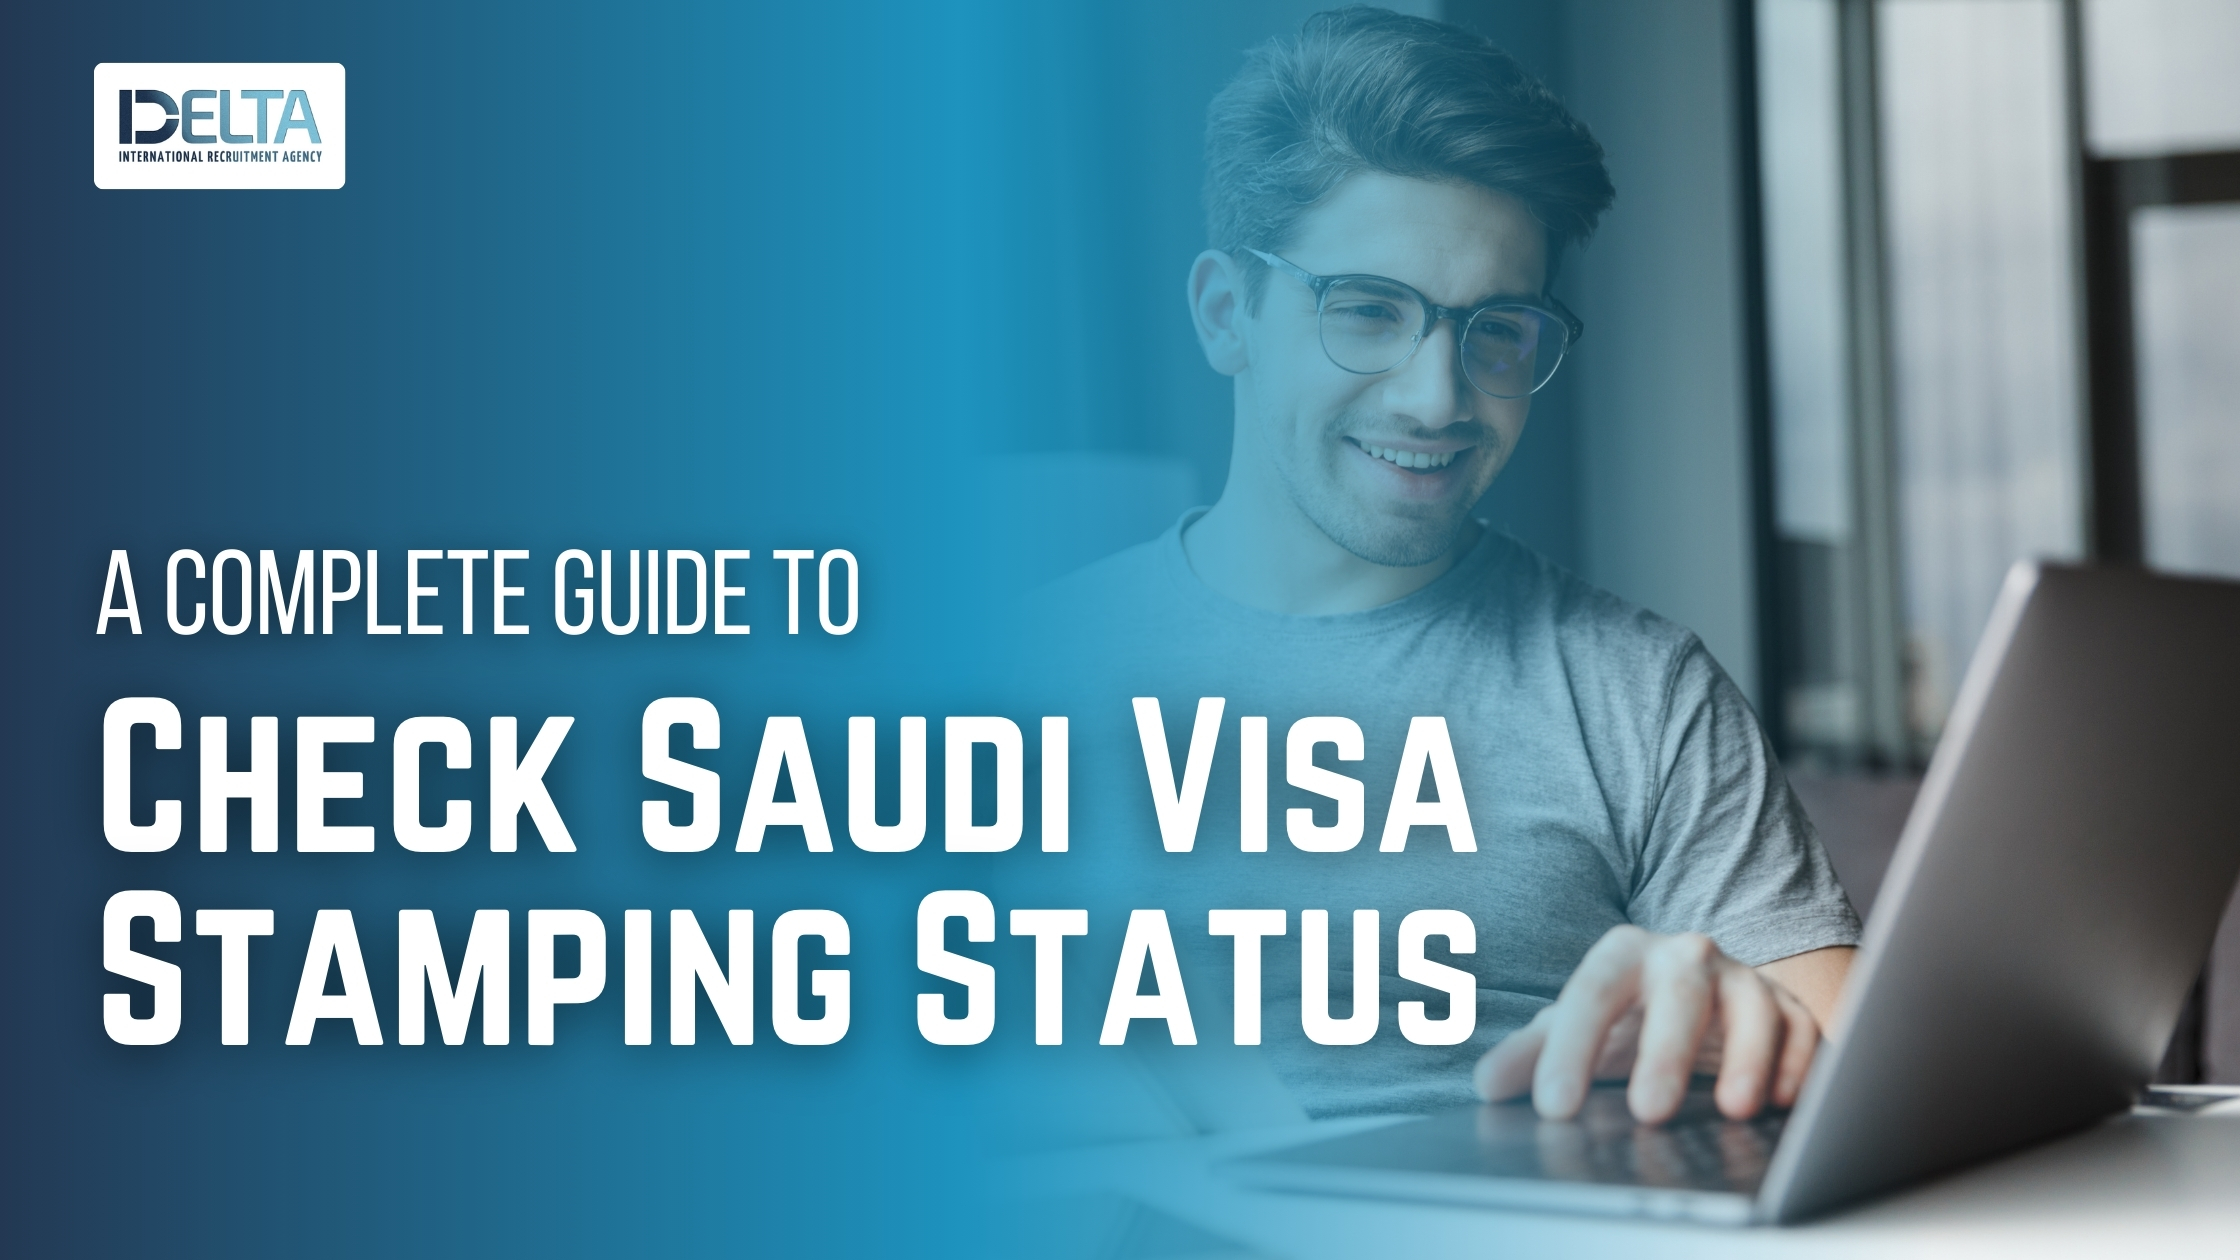 A Complete Guide to Check Saudi Visa Stamping Status